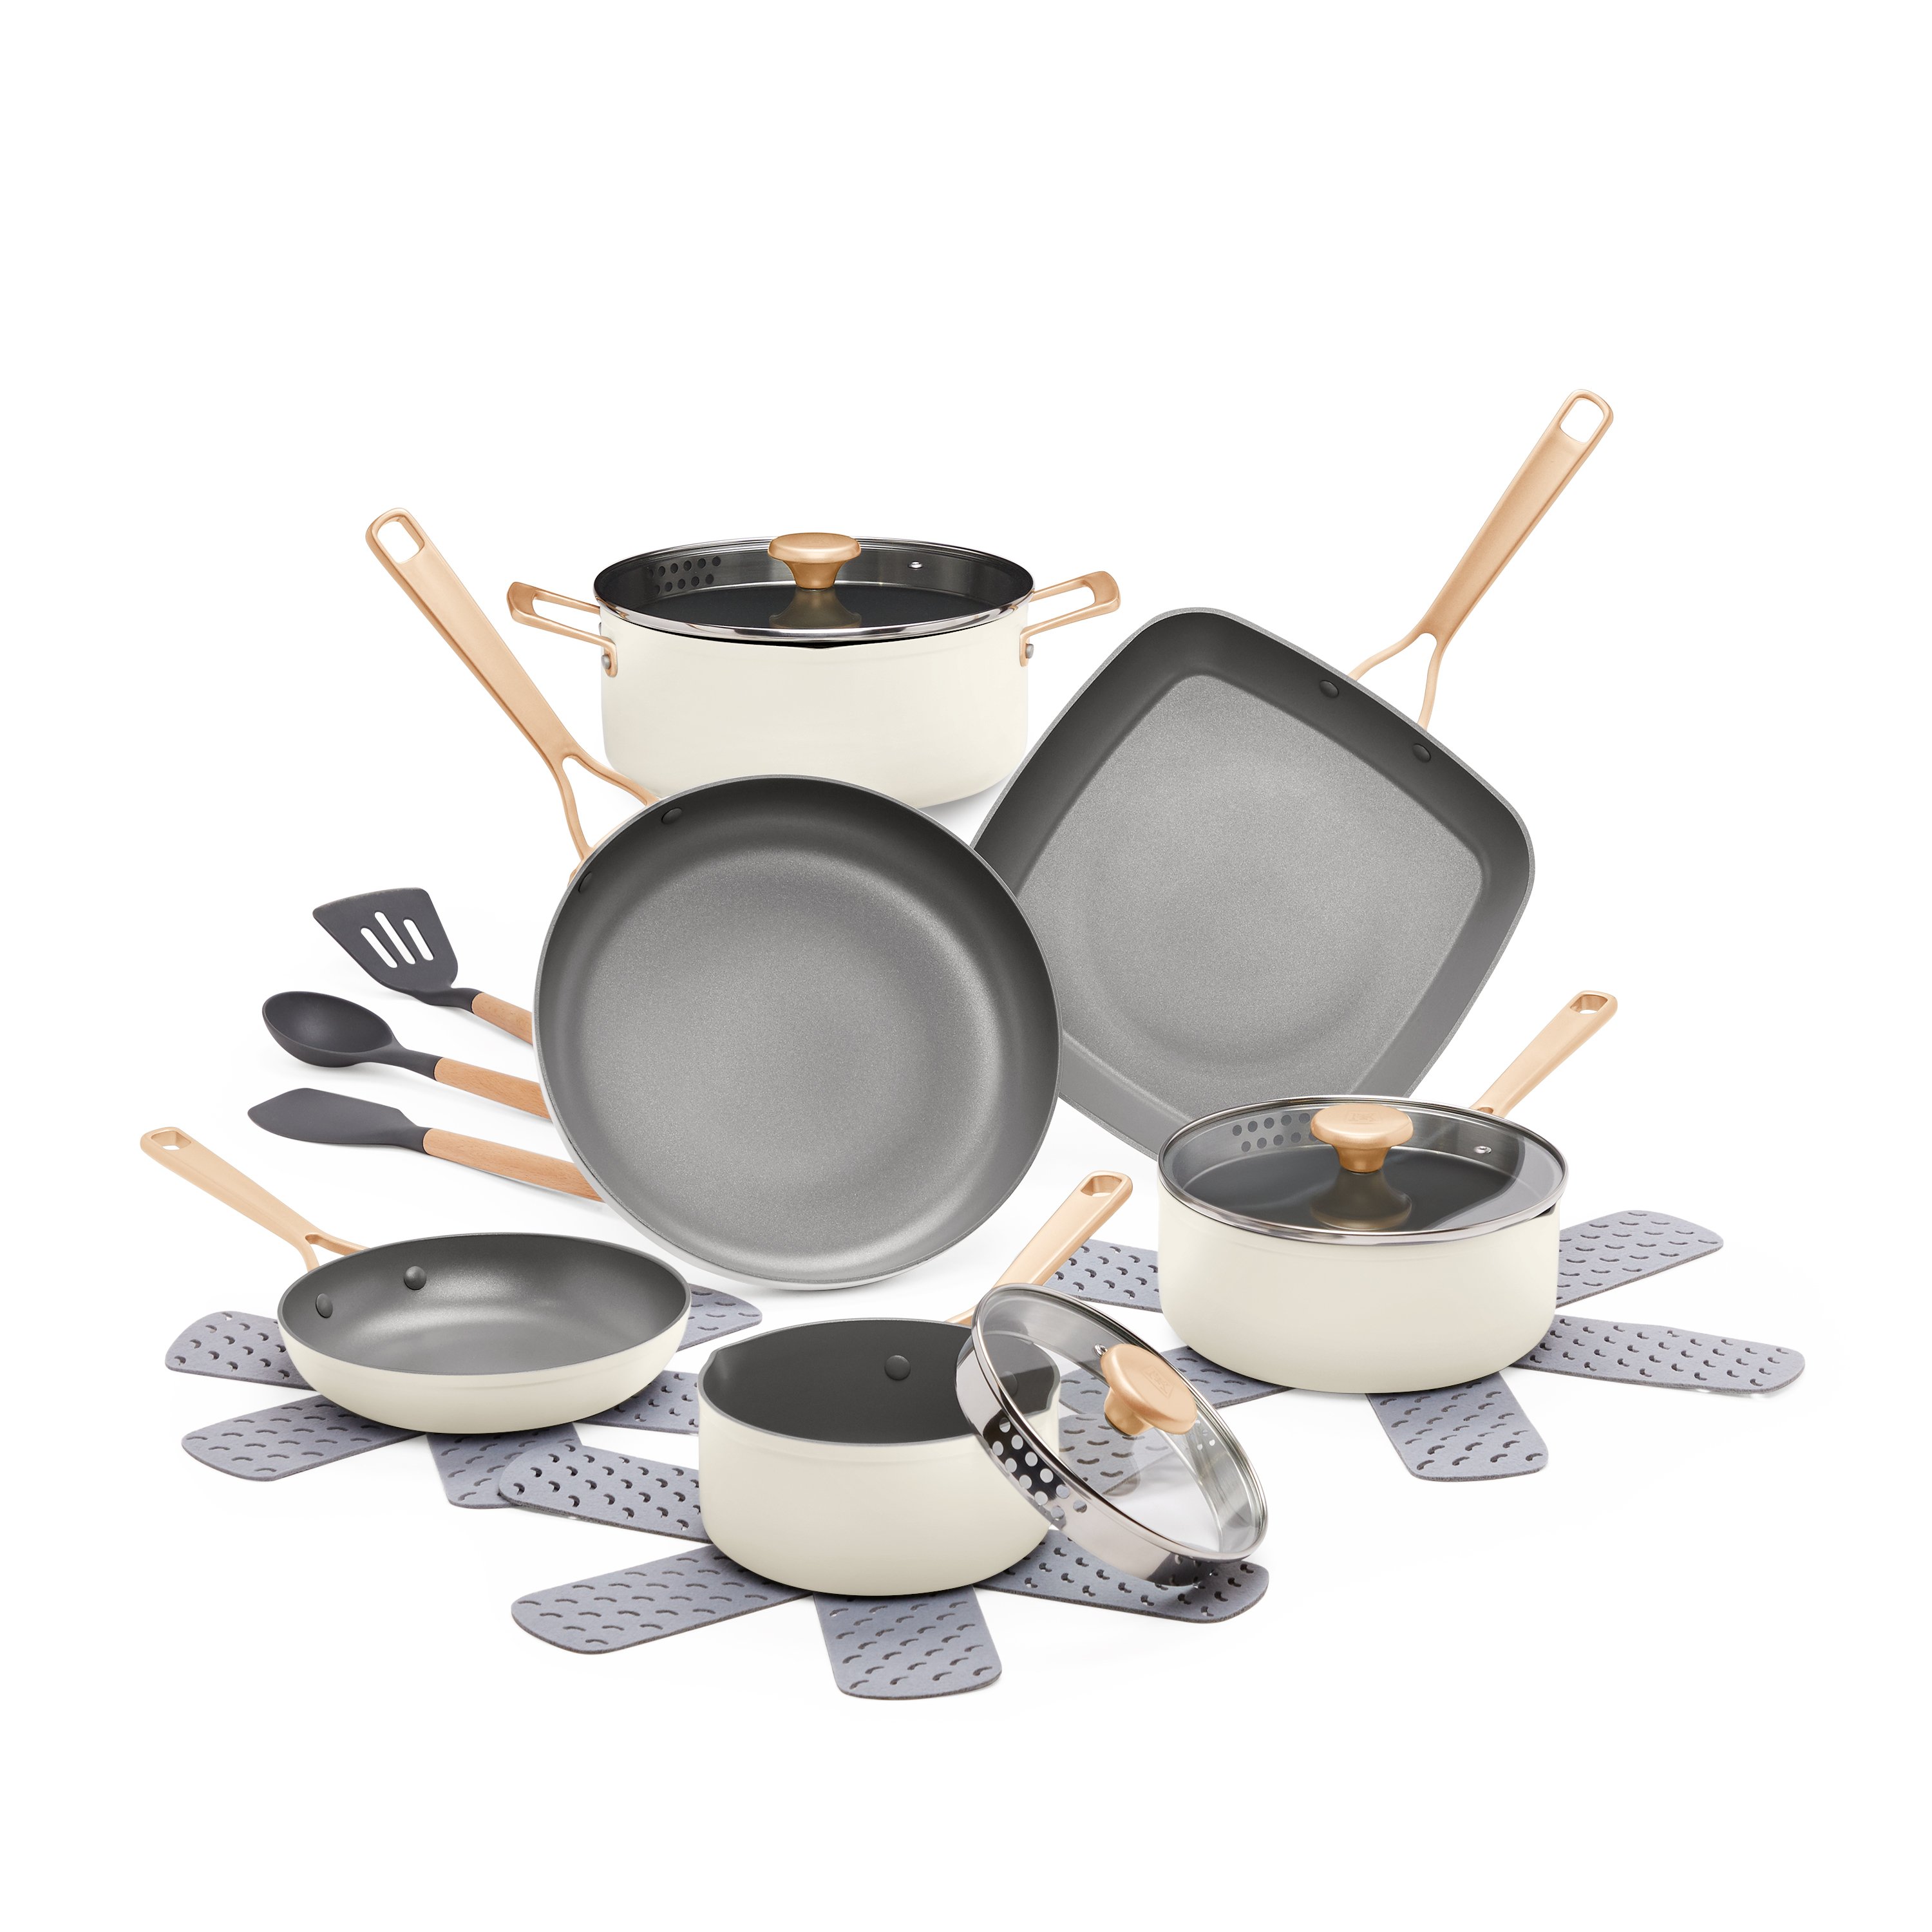 T-fal Advanced Titanium Set - Shop Cookware Sets at H-E-B